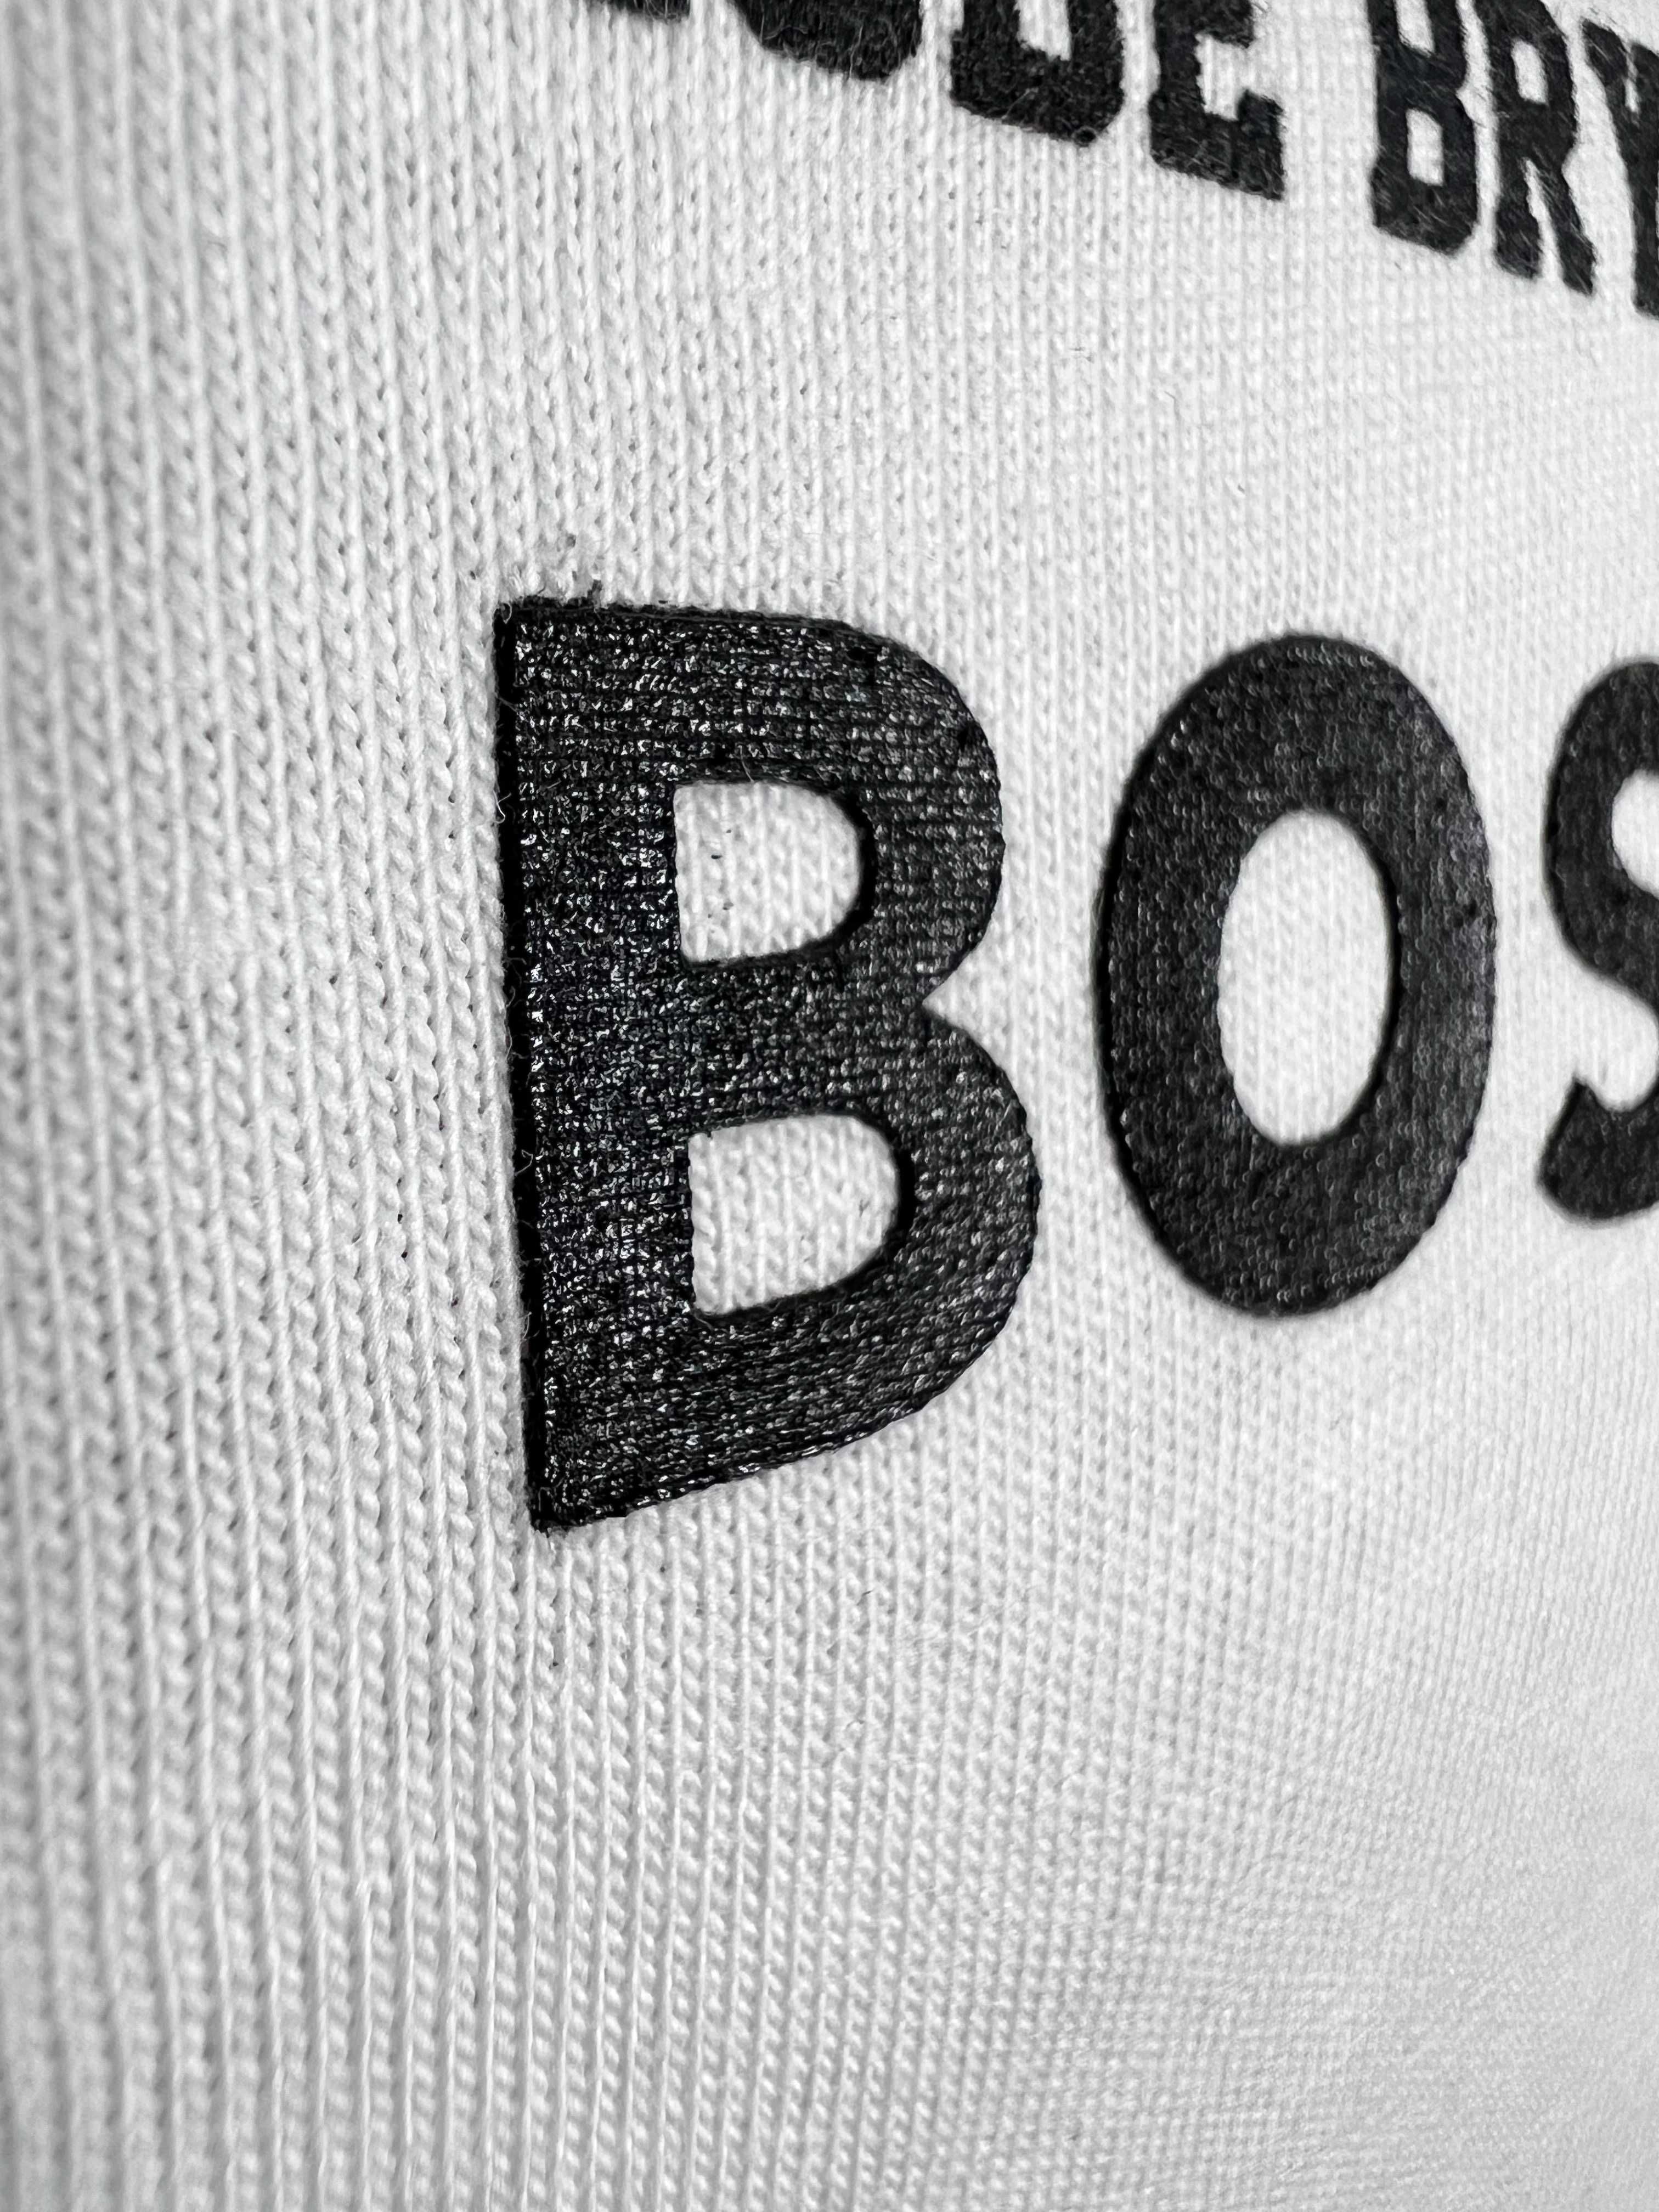 Hugo Boss бяла UNISEX тениска KOBE BRYANT размери - S XXL